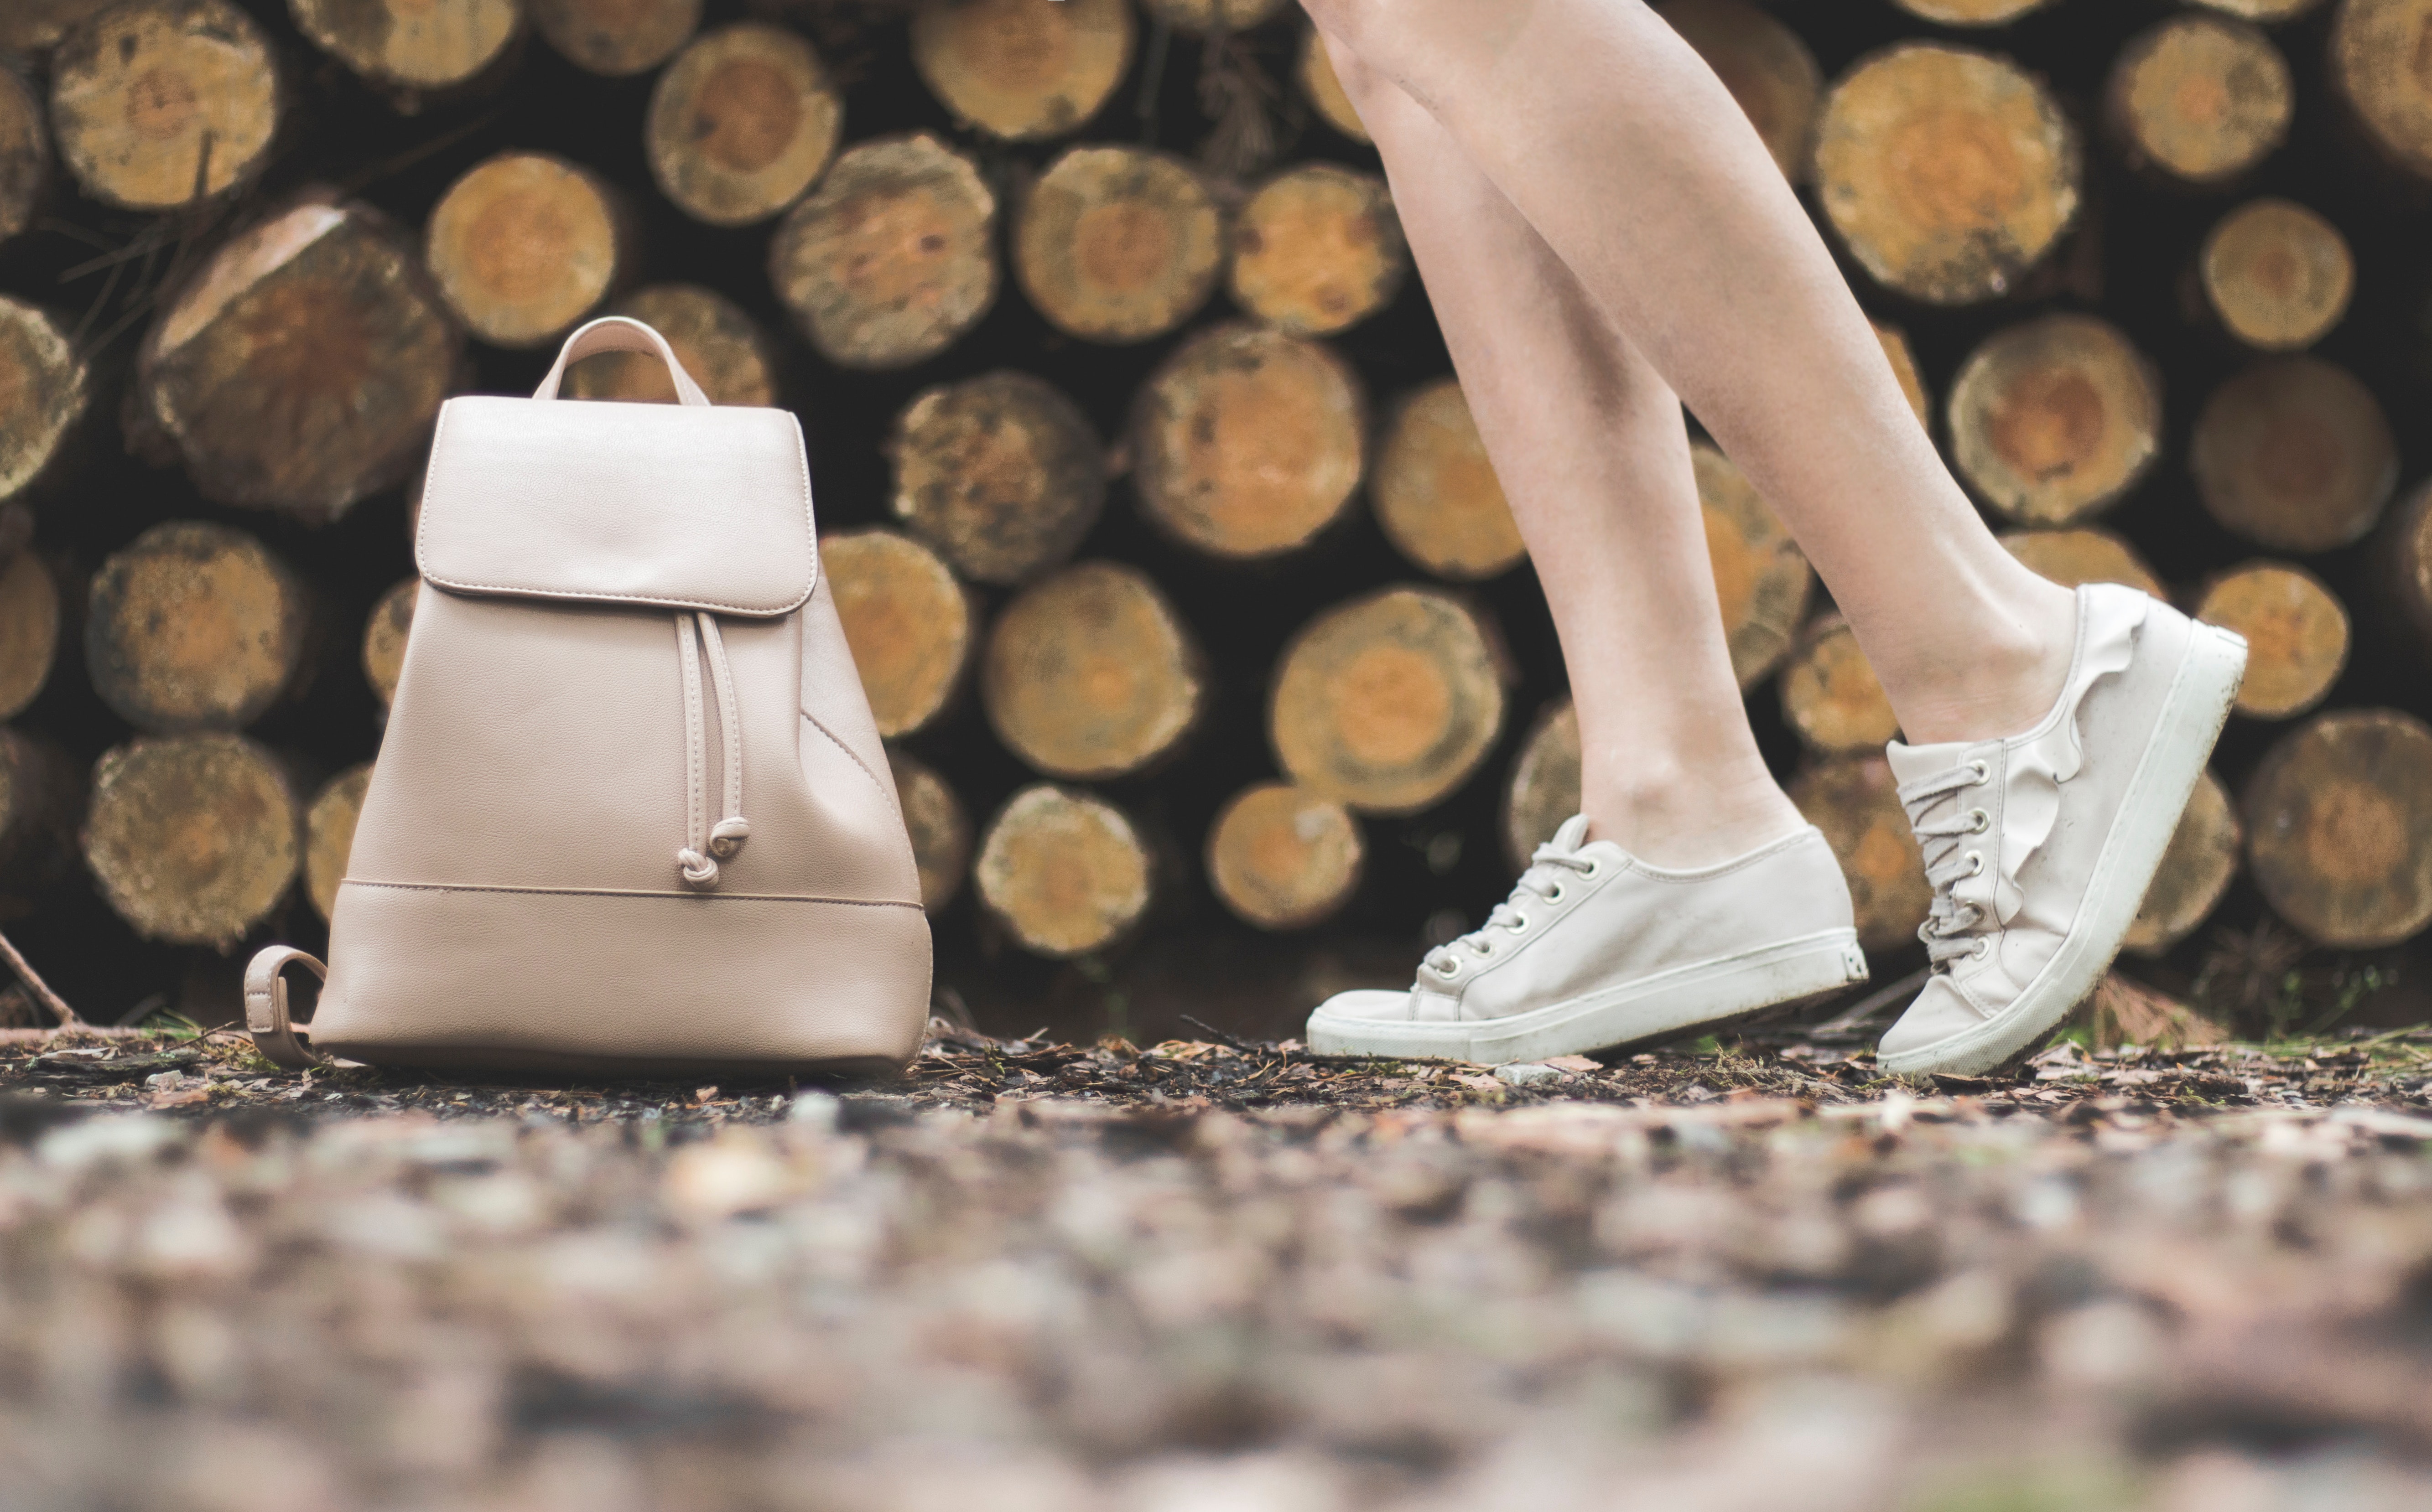 Mini backpack serut (Sumber gambar: Dominika Roseclay/Pexels)